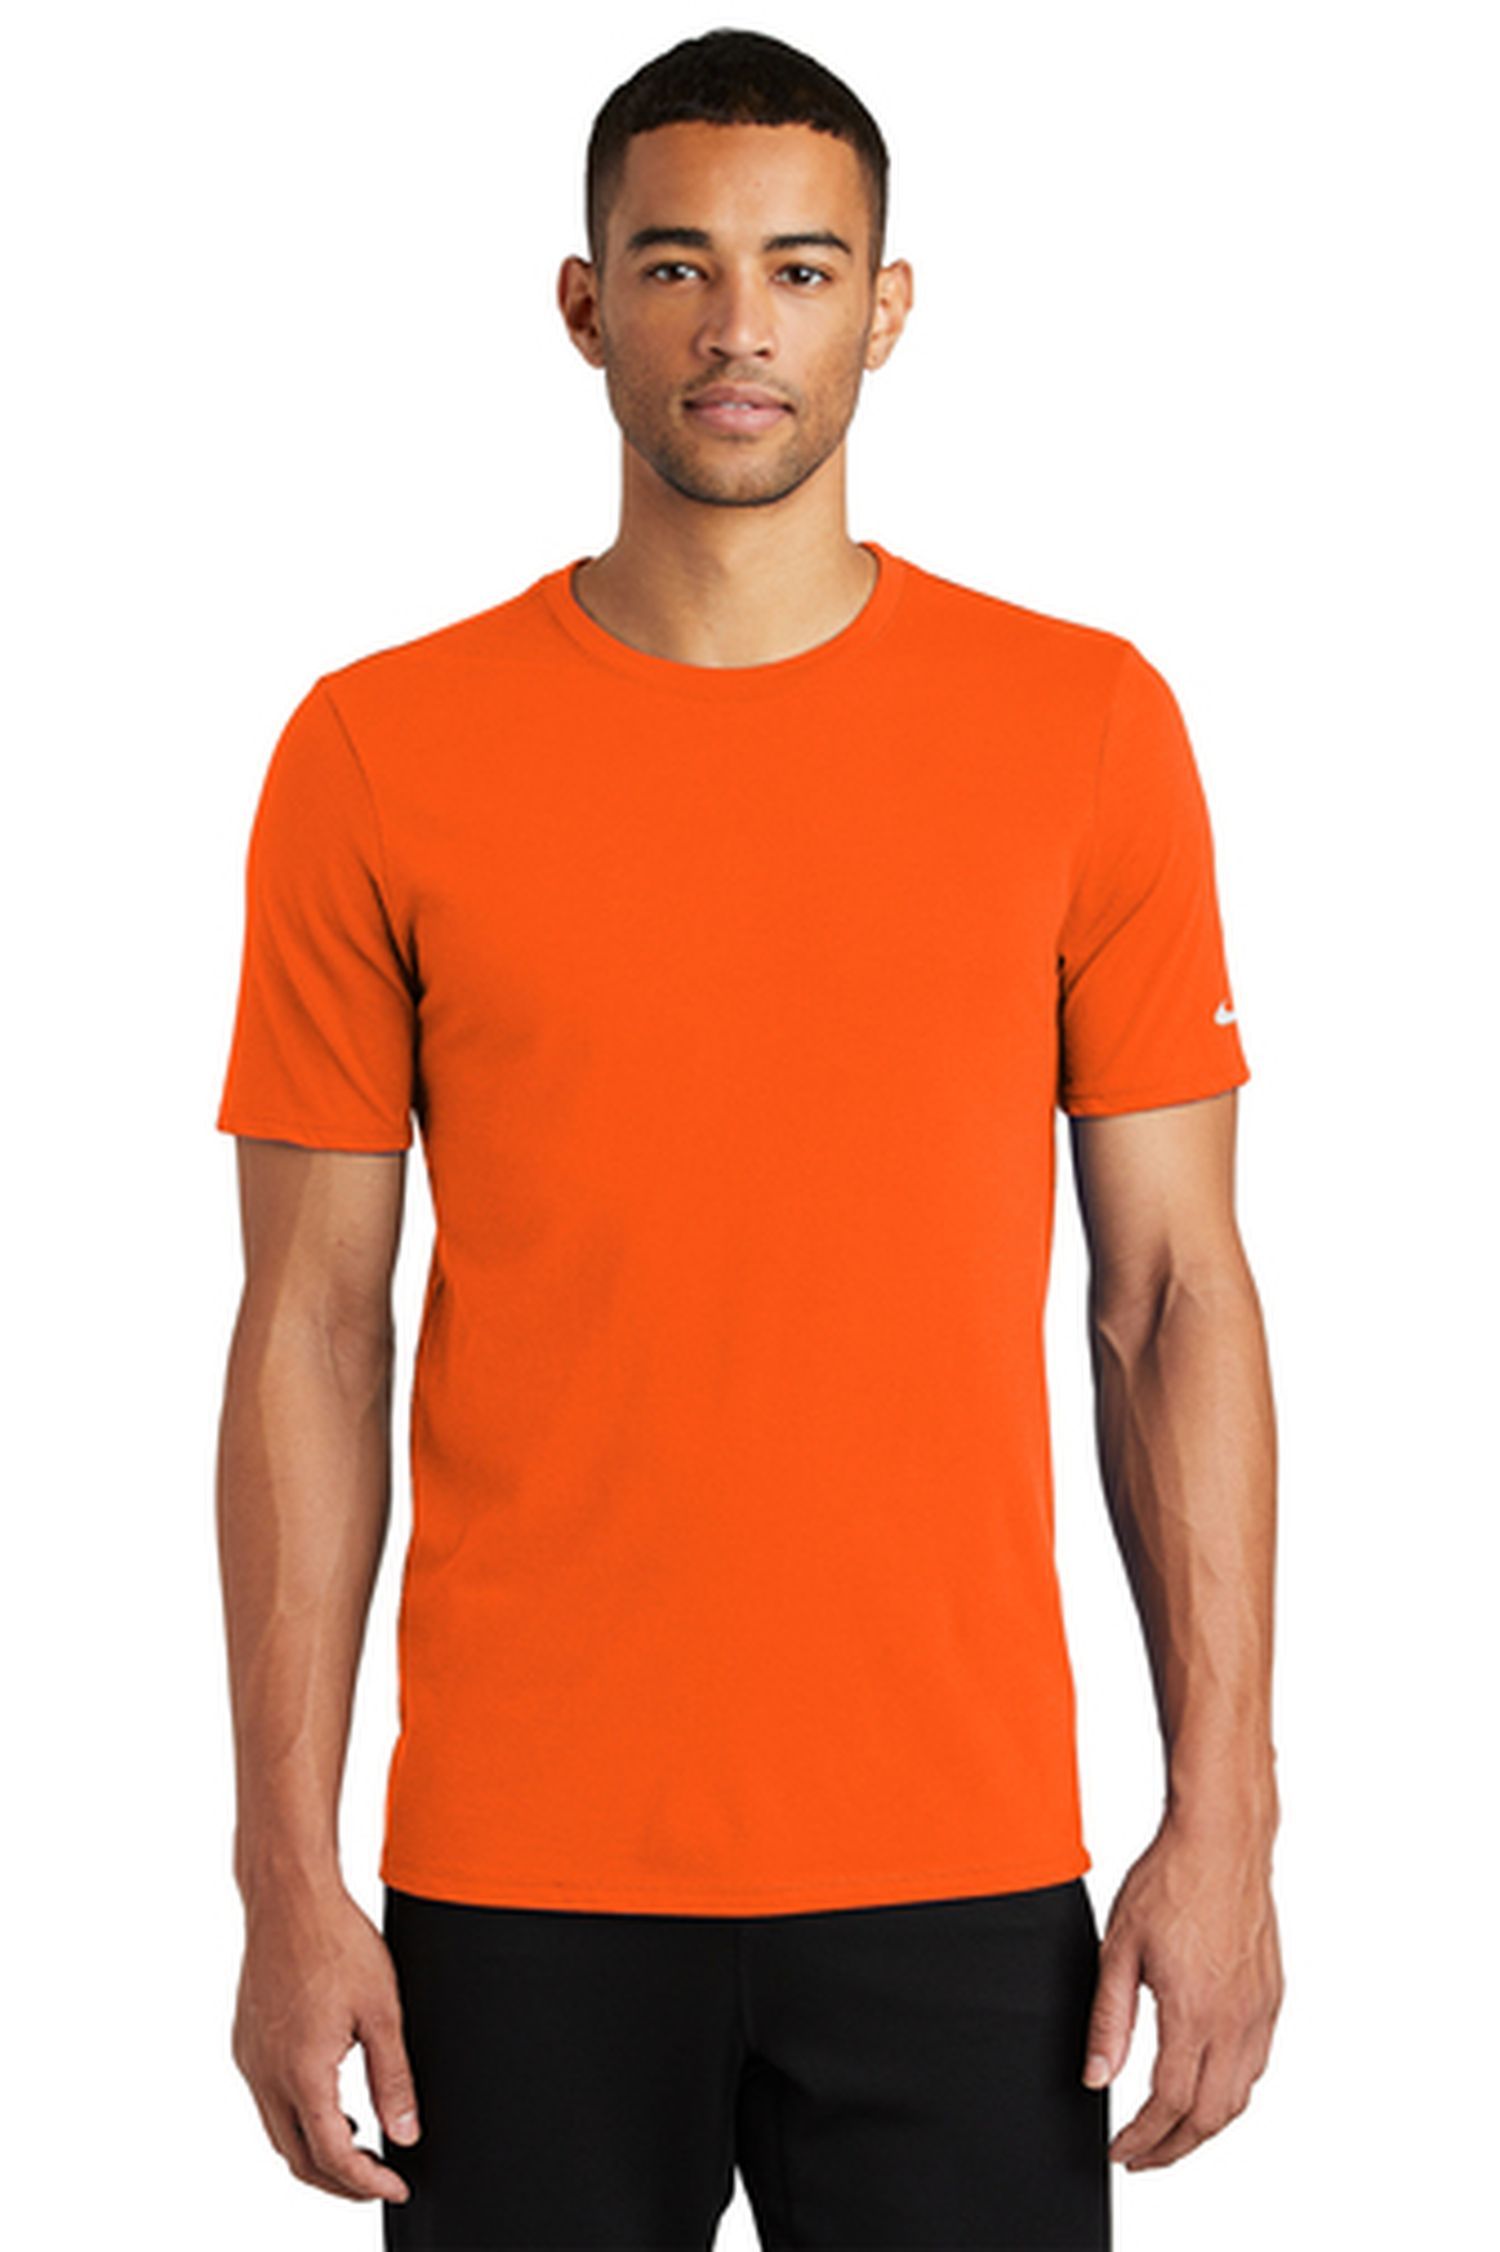 Nike Dri-FIT Performance Adult Unisex 4.7 oz 60/40 Cotton/Poly Short Sleeve T-shirt